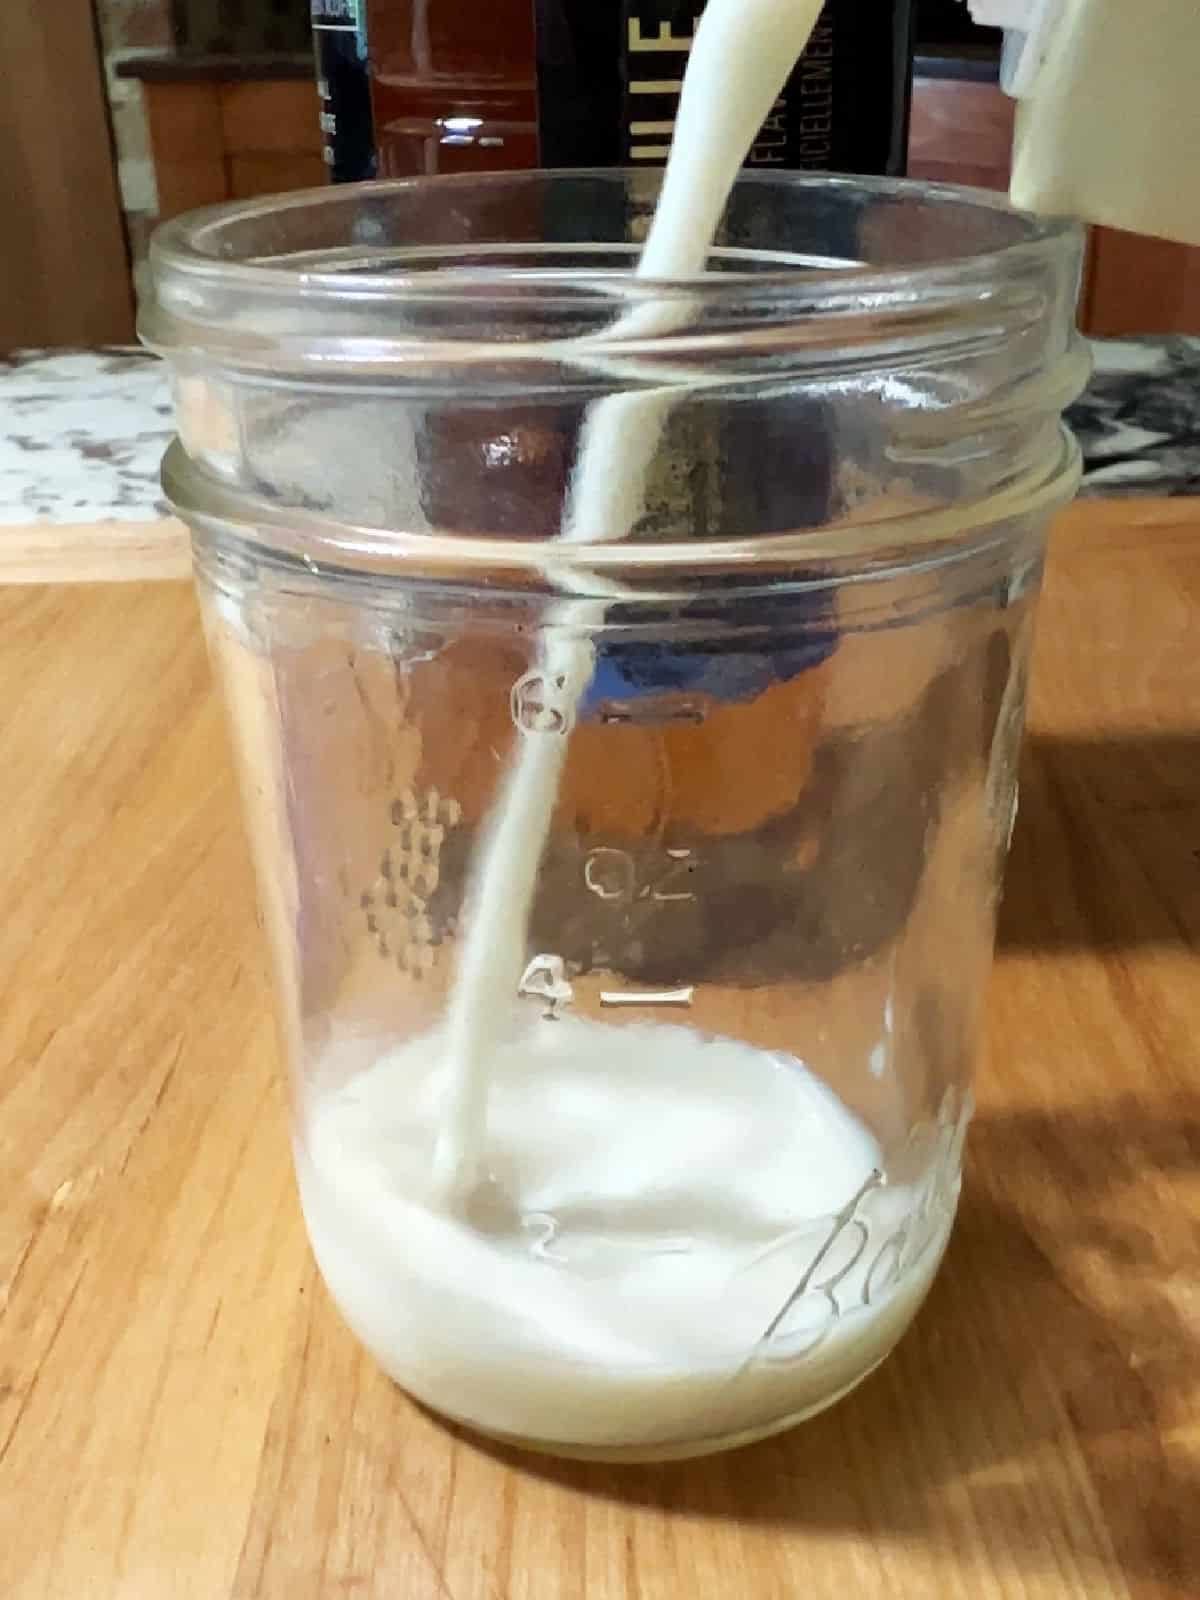 Adding almond milk to the jar.